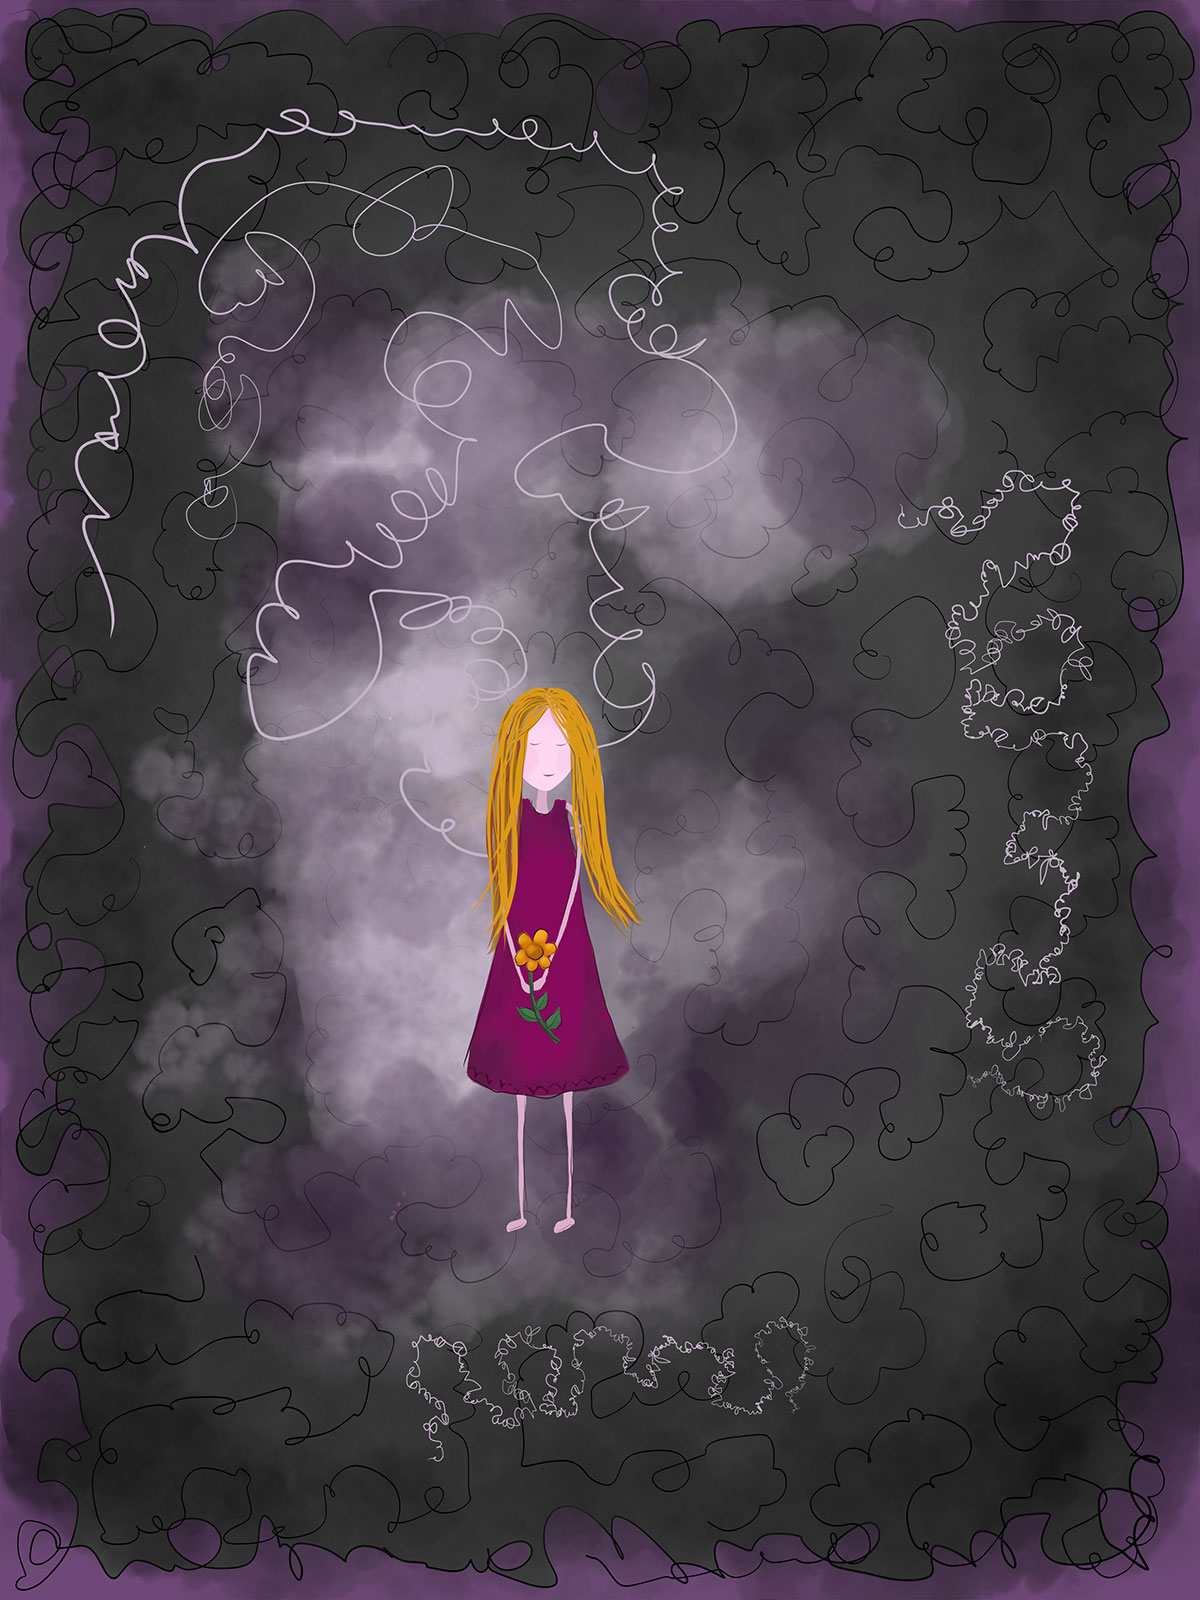  girl lost in a purple world